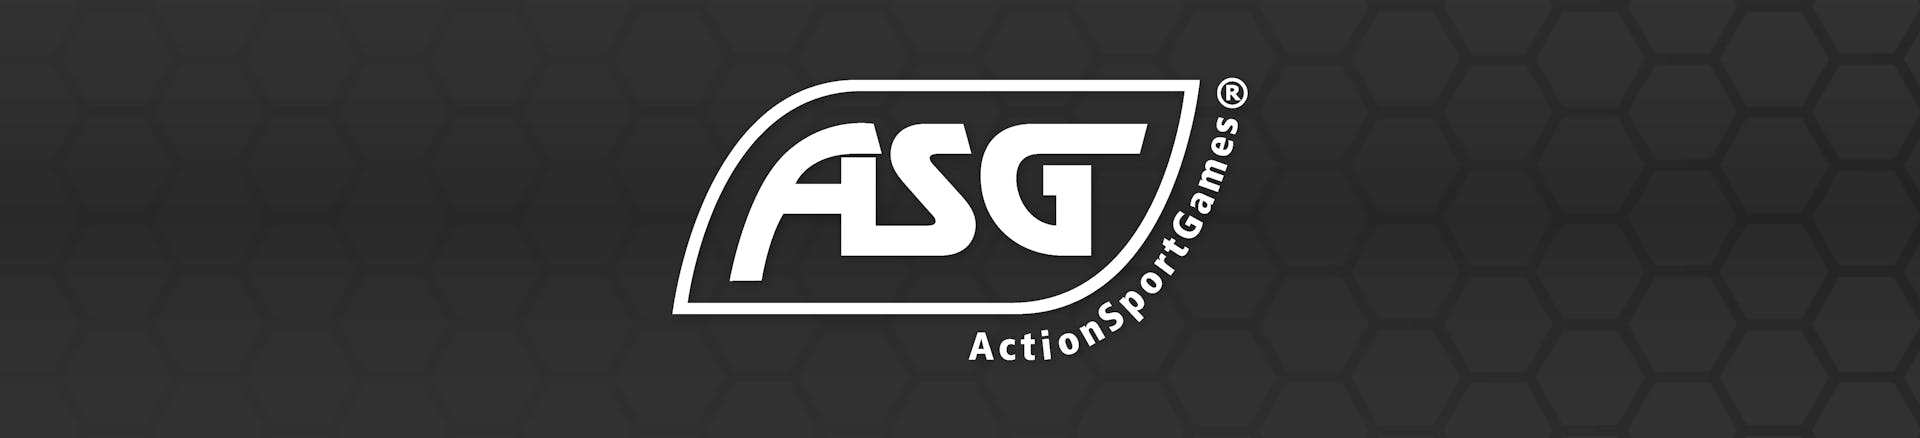 ASG Brand